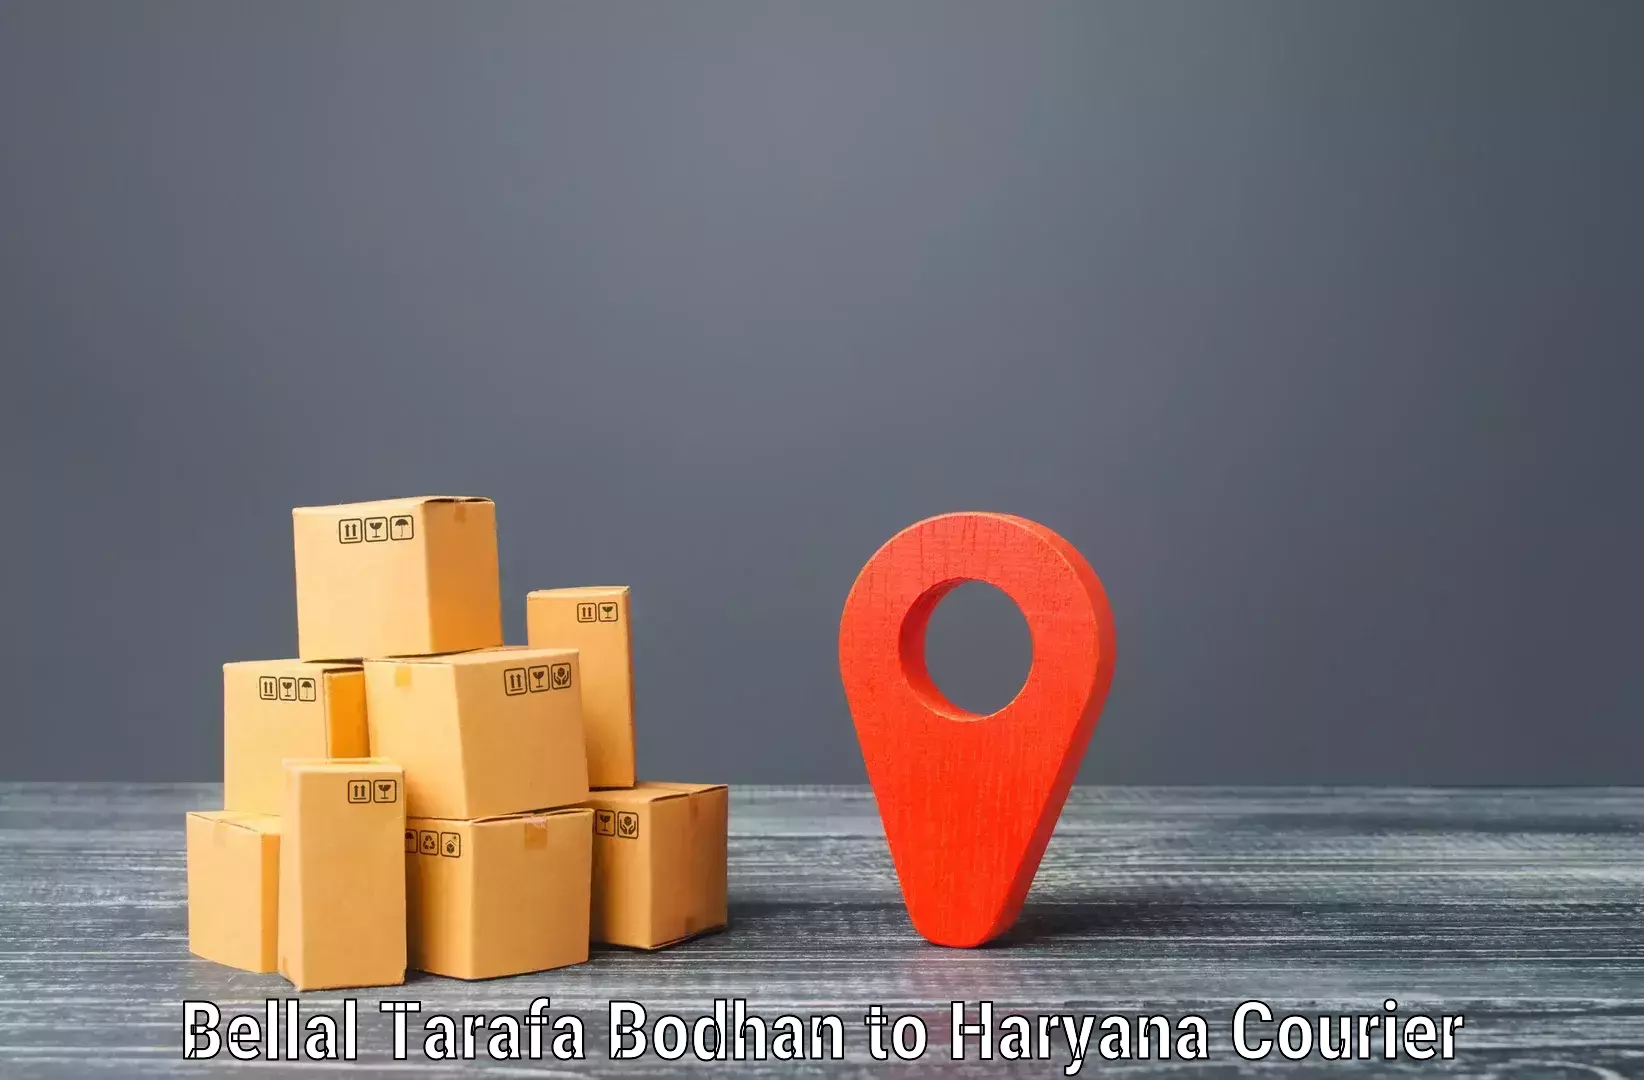 Customizable delivery plans in Bellal Tarafa Bodhan to NCR Haryana